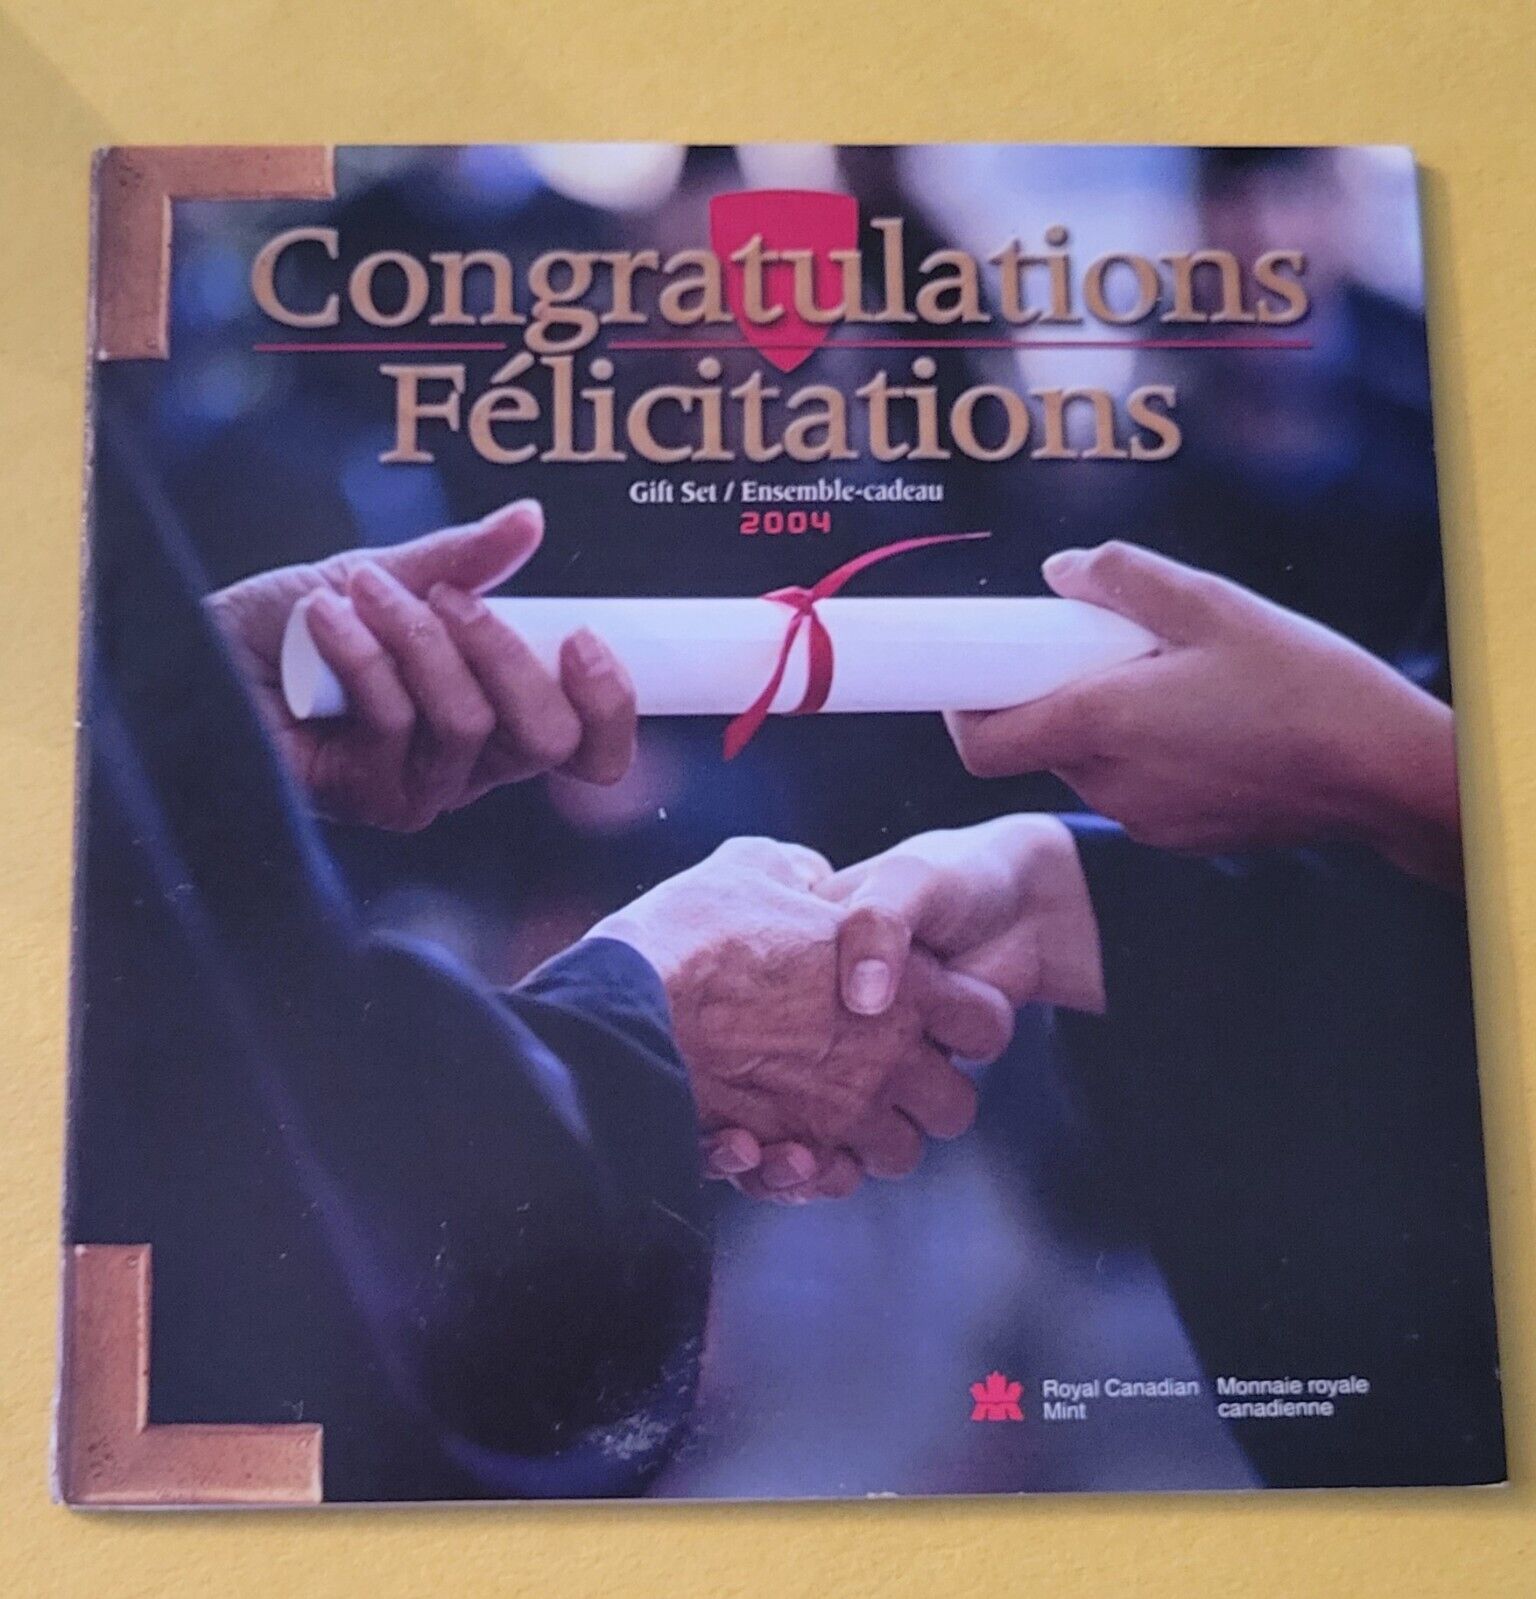 2004 Canada Graduation Coin Gift Set Congratulations